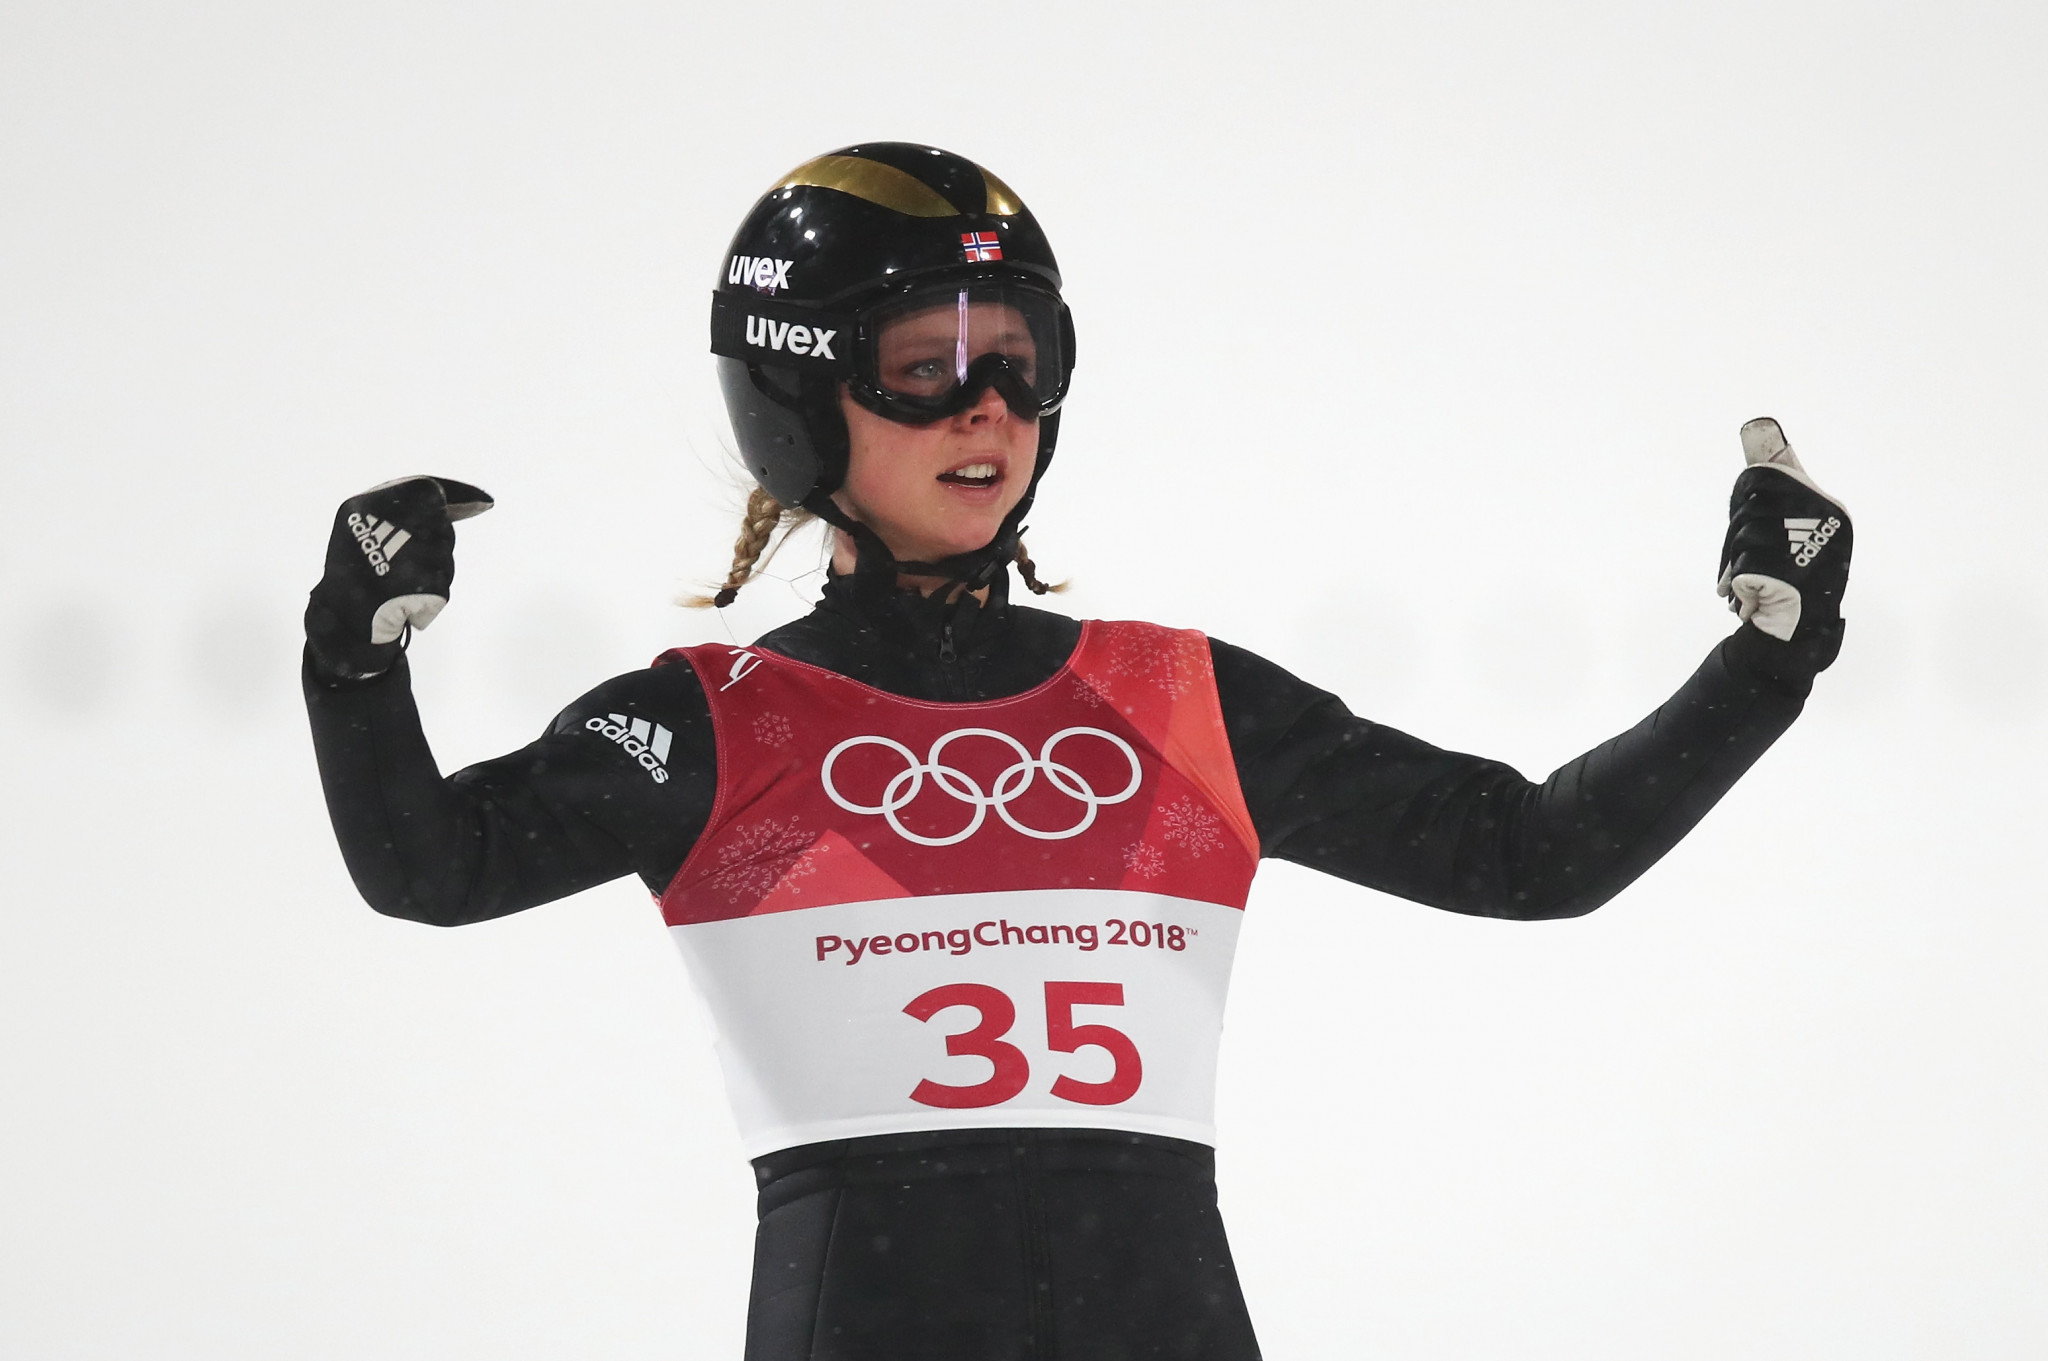 Lundby continues sensational form with ski jumping gold at Pyeongchang 2018